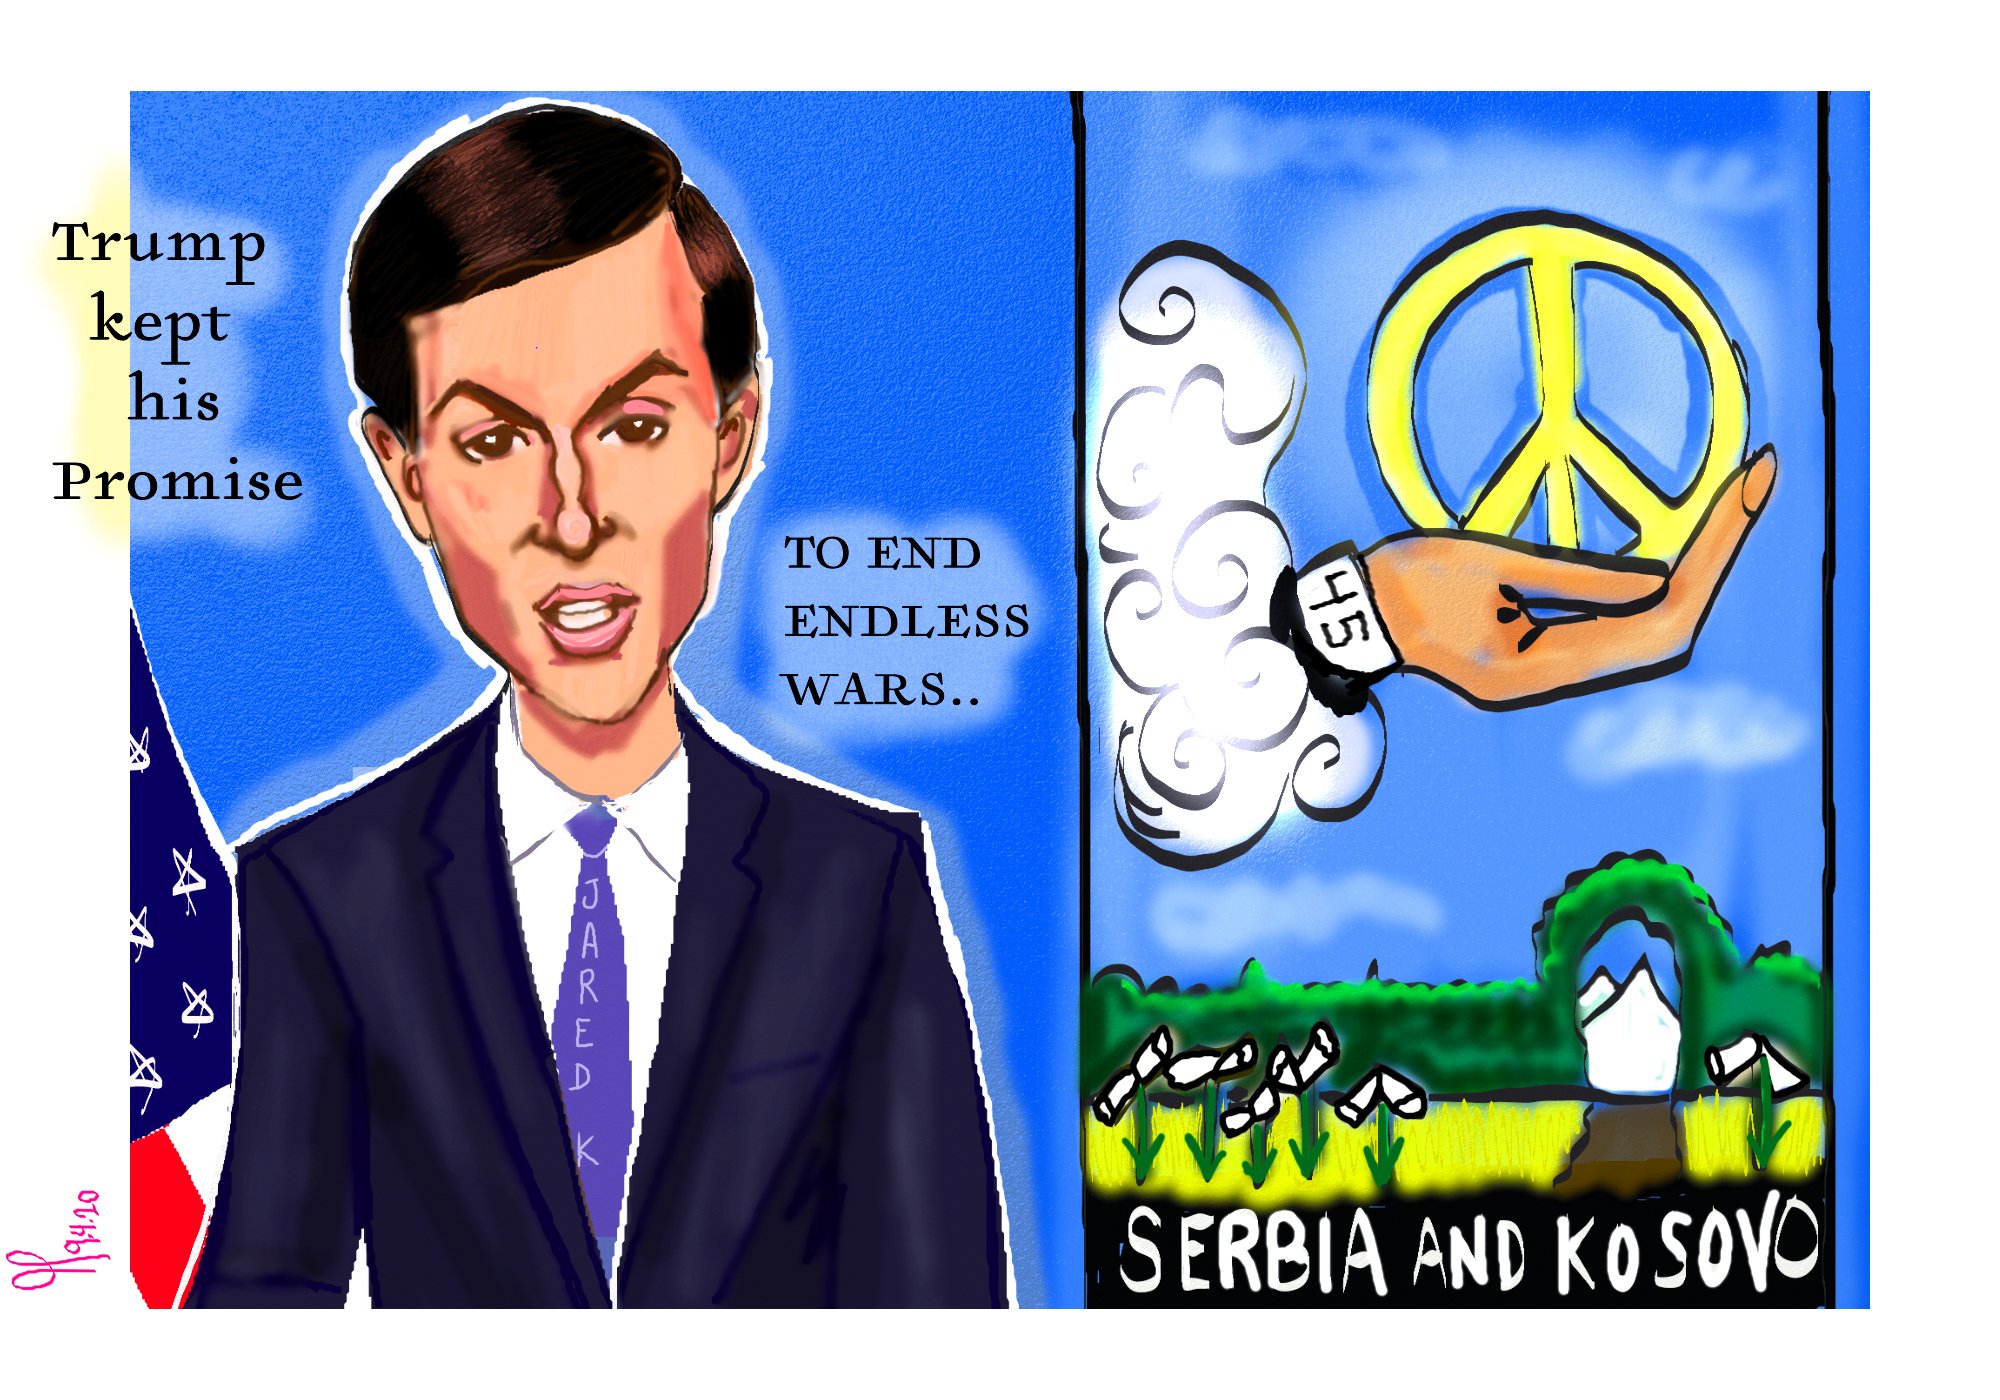 Jared Kushner Richard grenell political cartoons for President Donald Trump White House Press briefing kosovo-serbia post thumbnail image